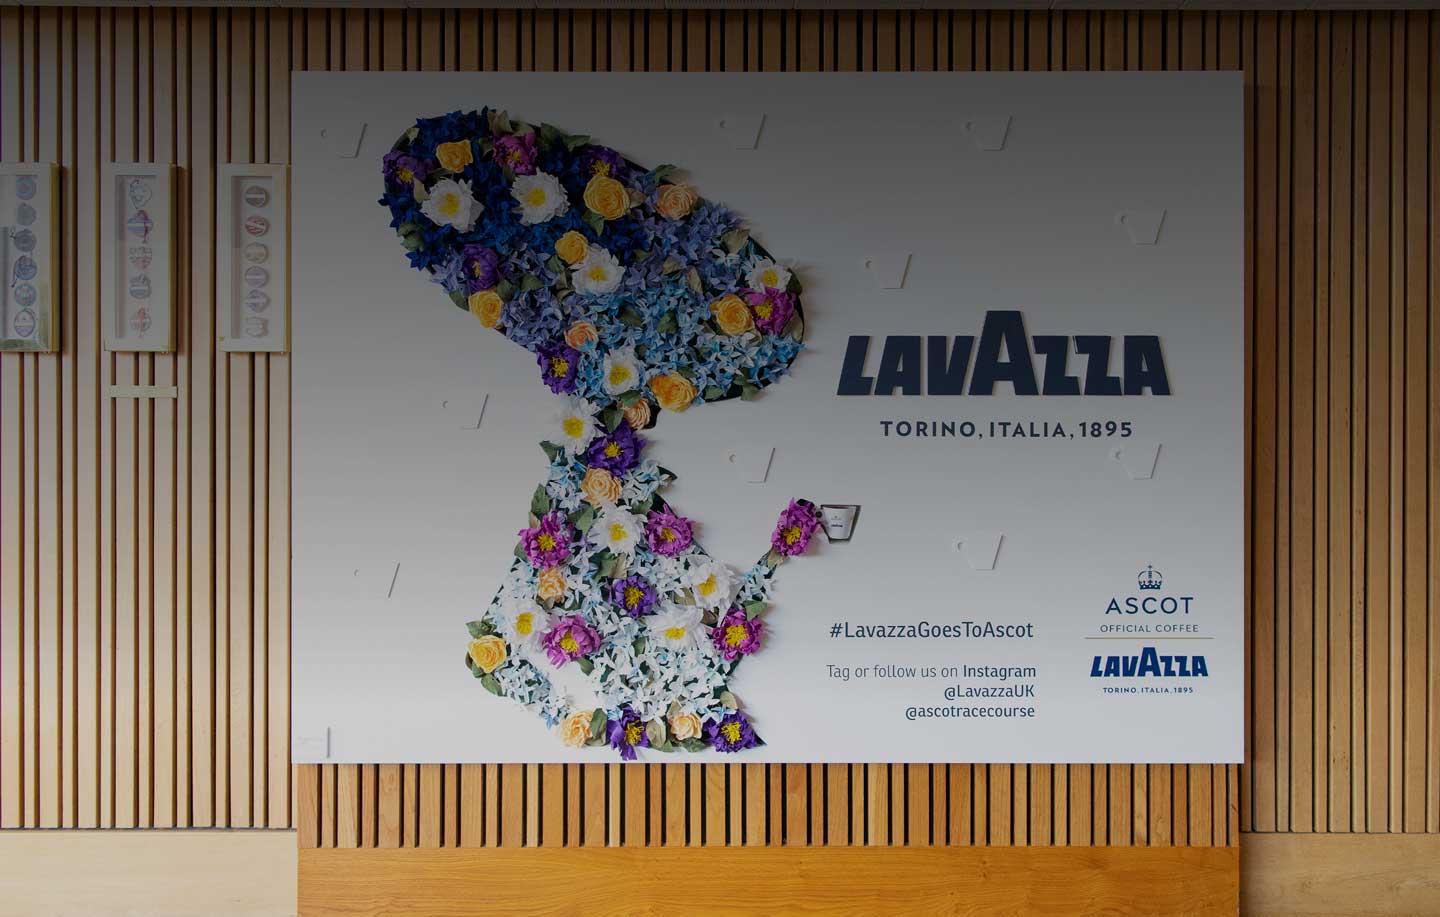 Royal Ascot и Lavazza: споделяне на едни и същи ценности